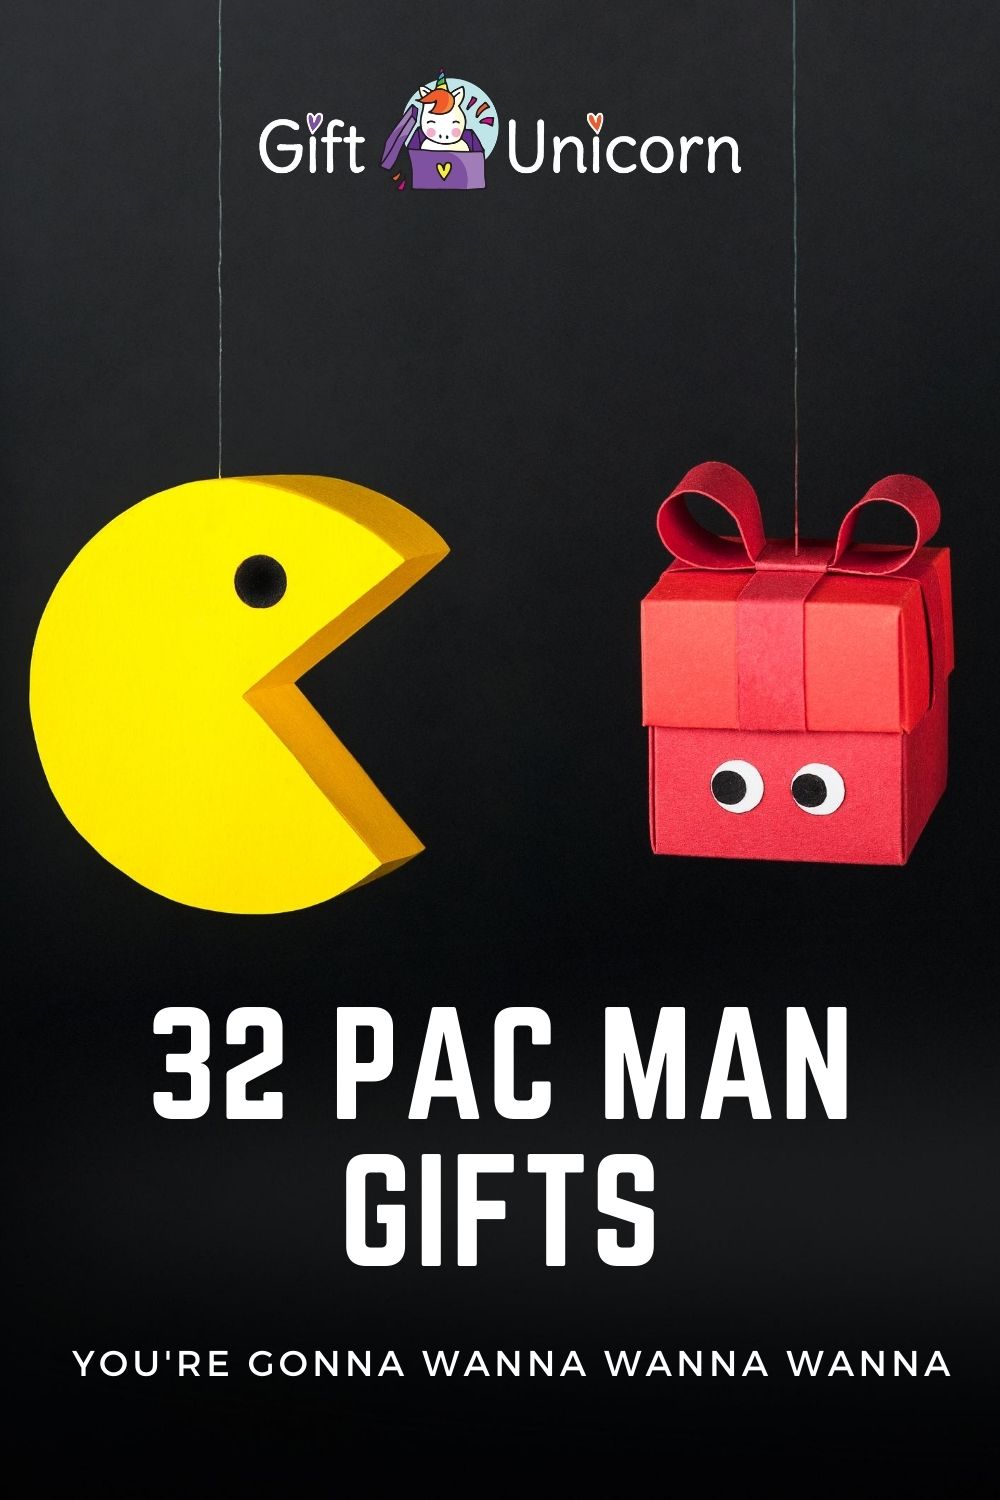 32 Pac man presents pinterest pin image